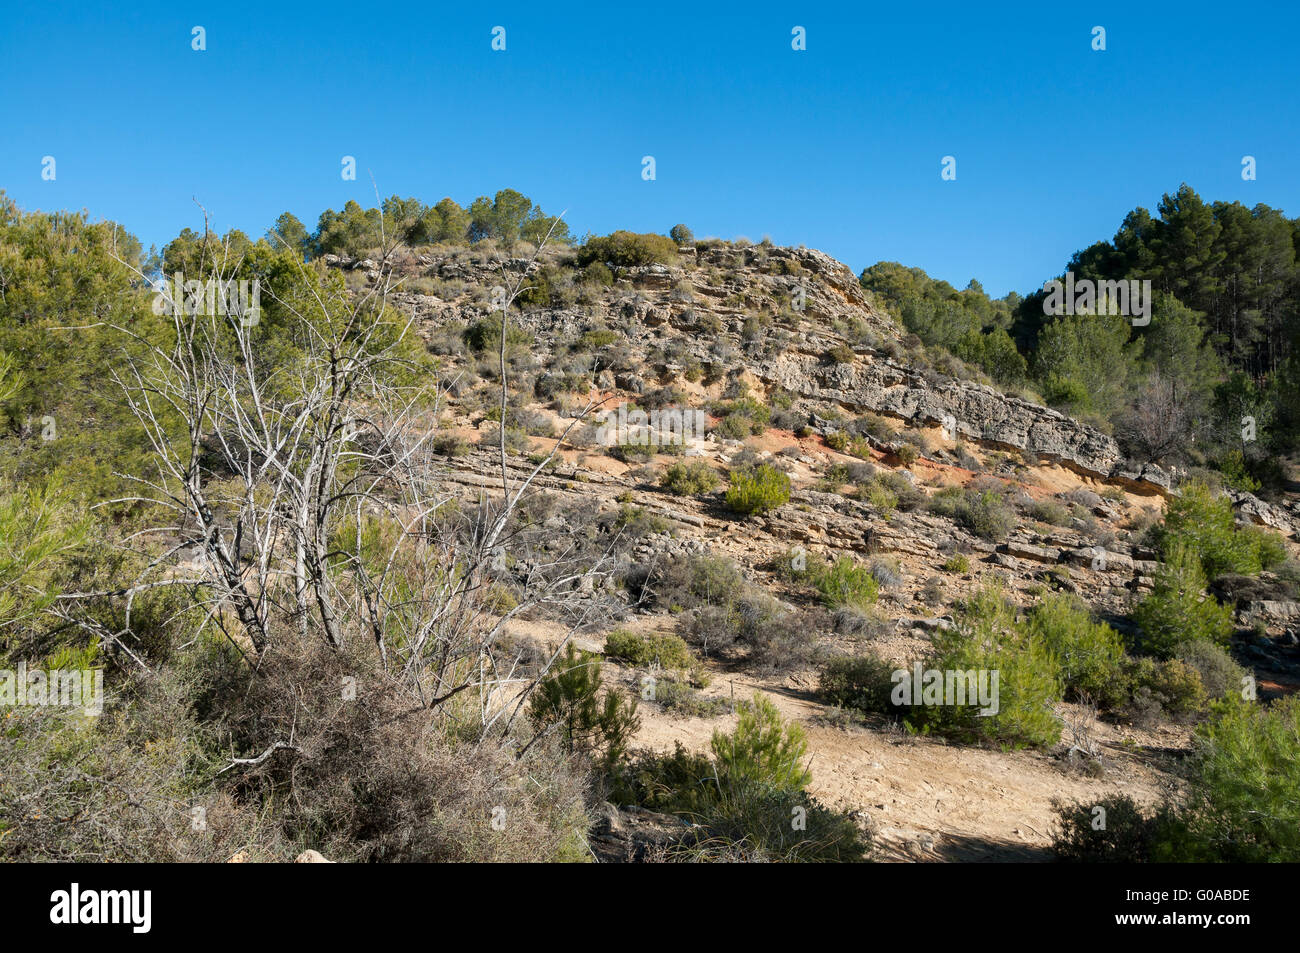 Mediterranean shrublands over limestones and sandstones, with esparto, lavender, rosemary, kermes oak, junipers, etc. Stock Photo